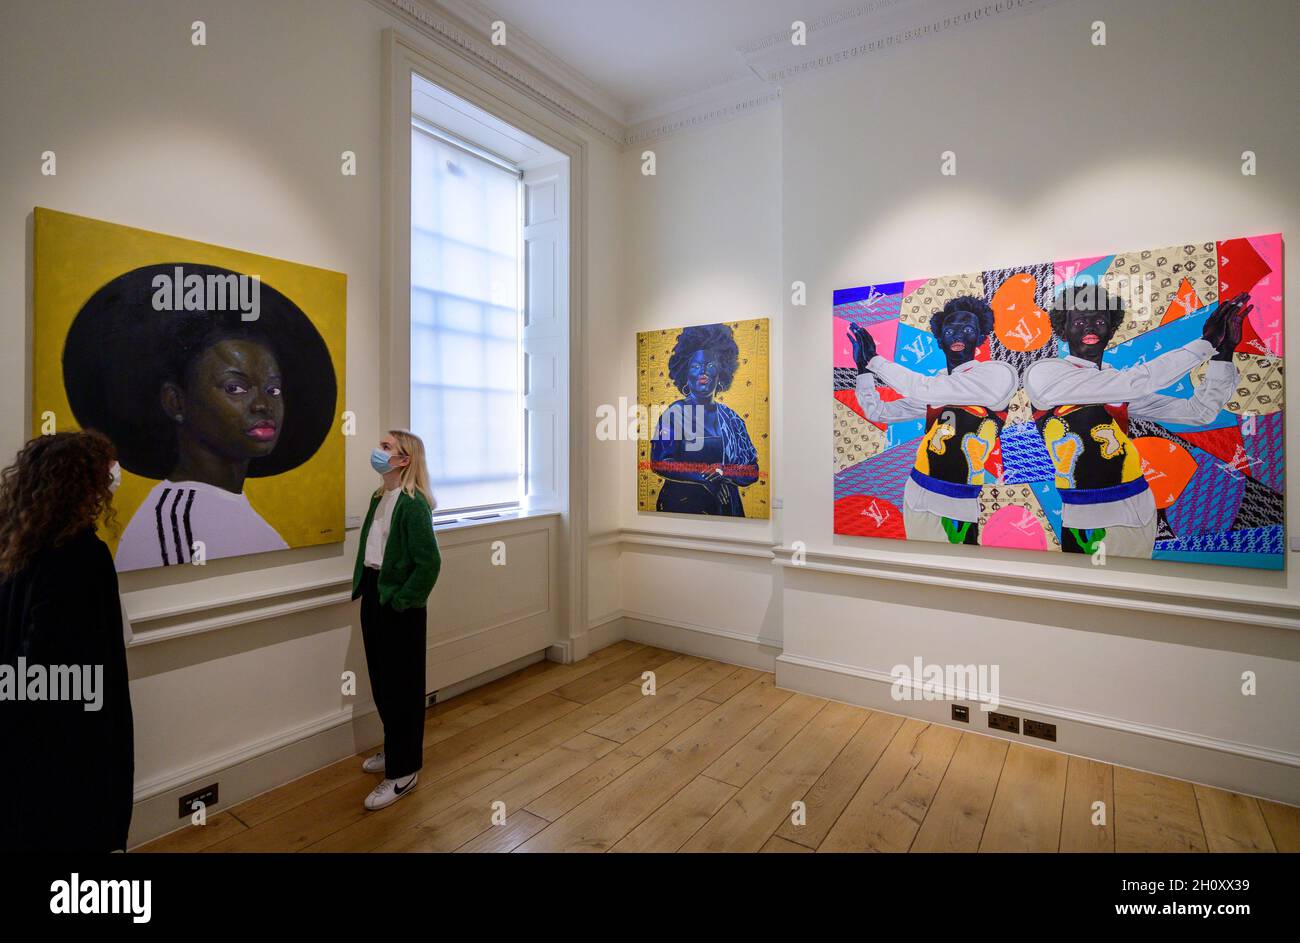 1-54 Contemporary African Art Fair, la fiera d'arte più importante dedicata all'arte contemporanea africana, t Somerset House. Immagine, a sinistra: Oluwole Omofemi, Abeni 2 Foto Stock